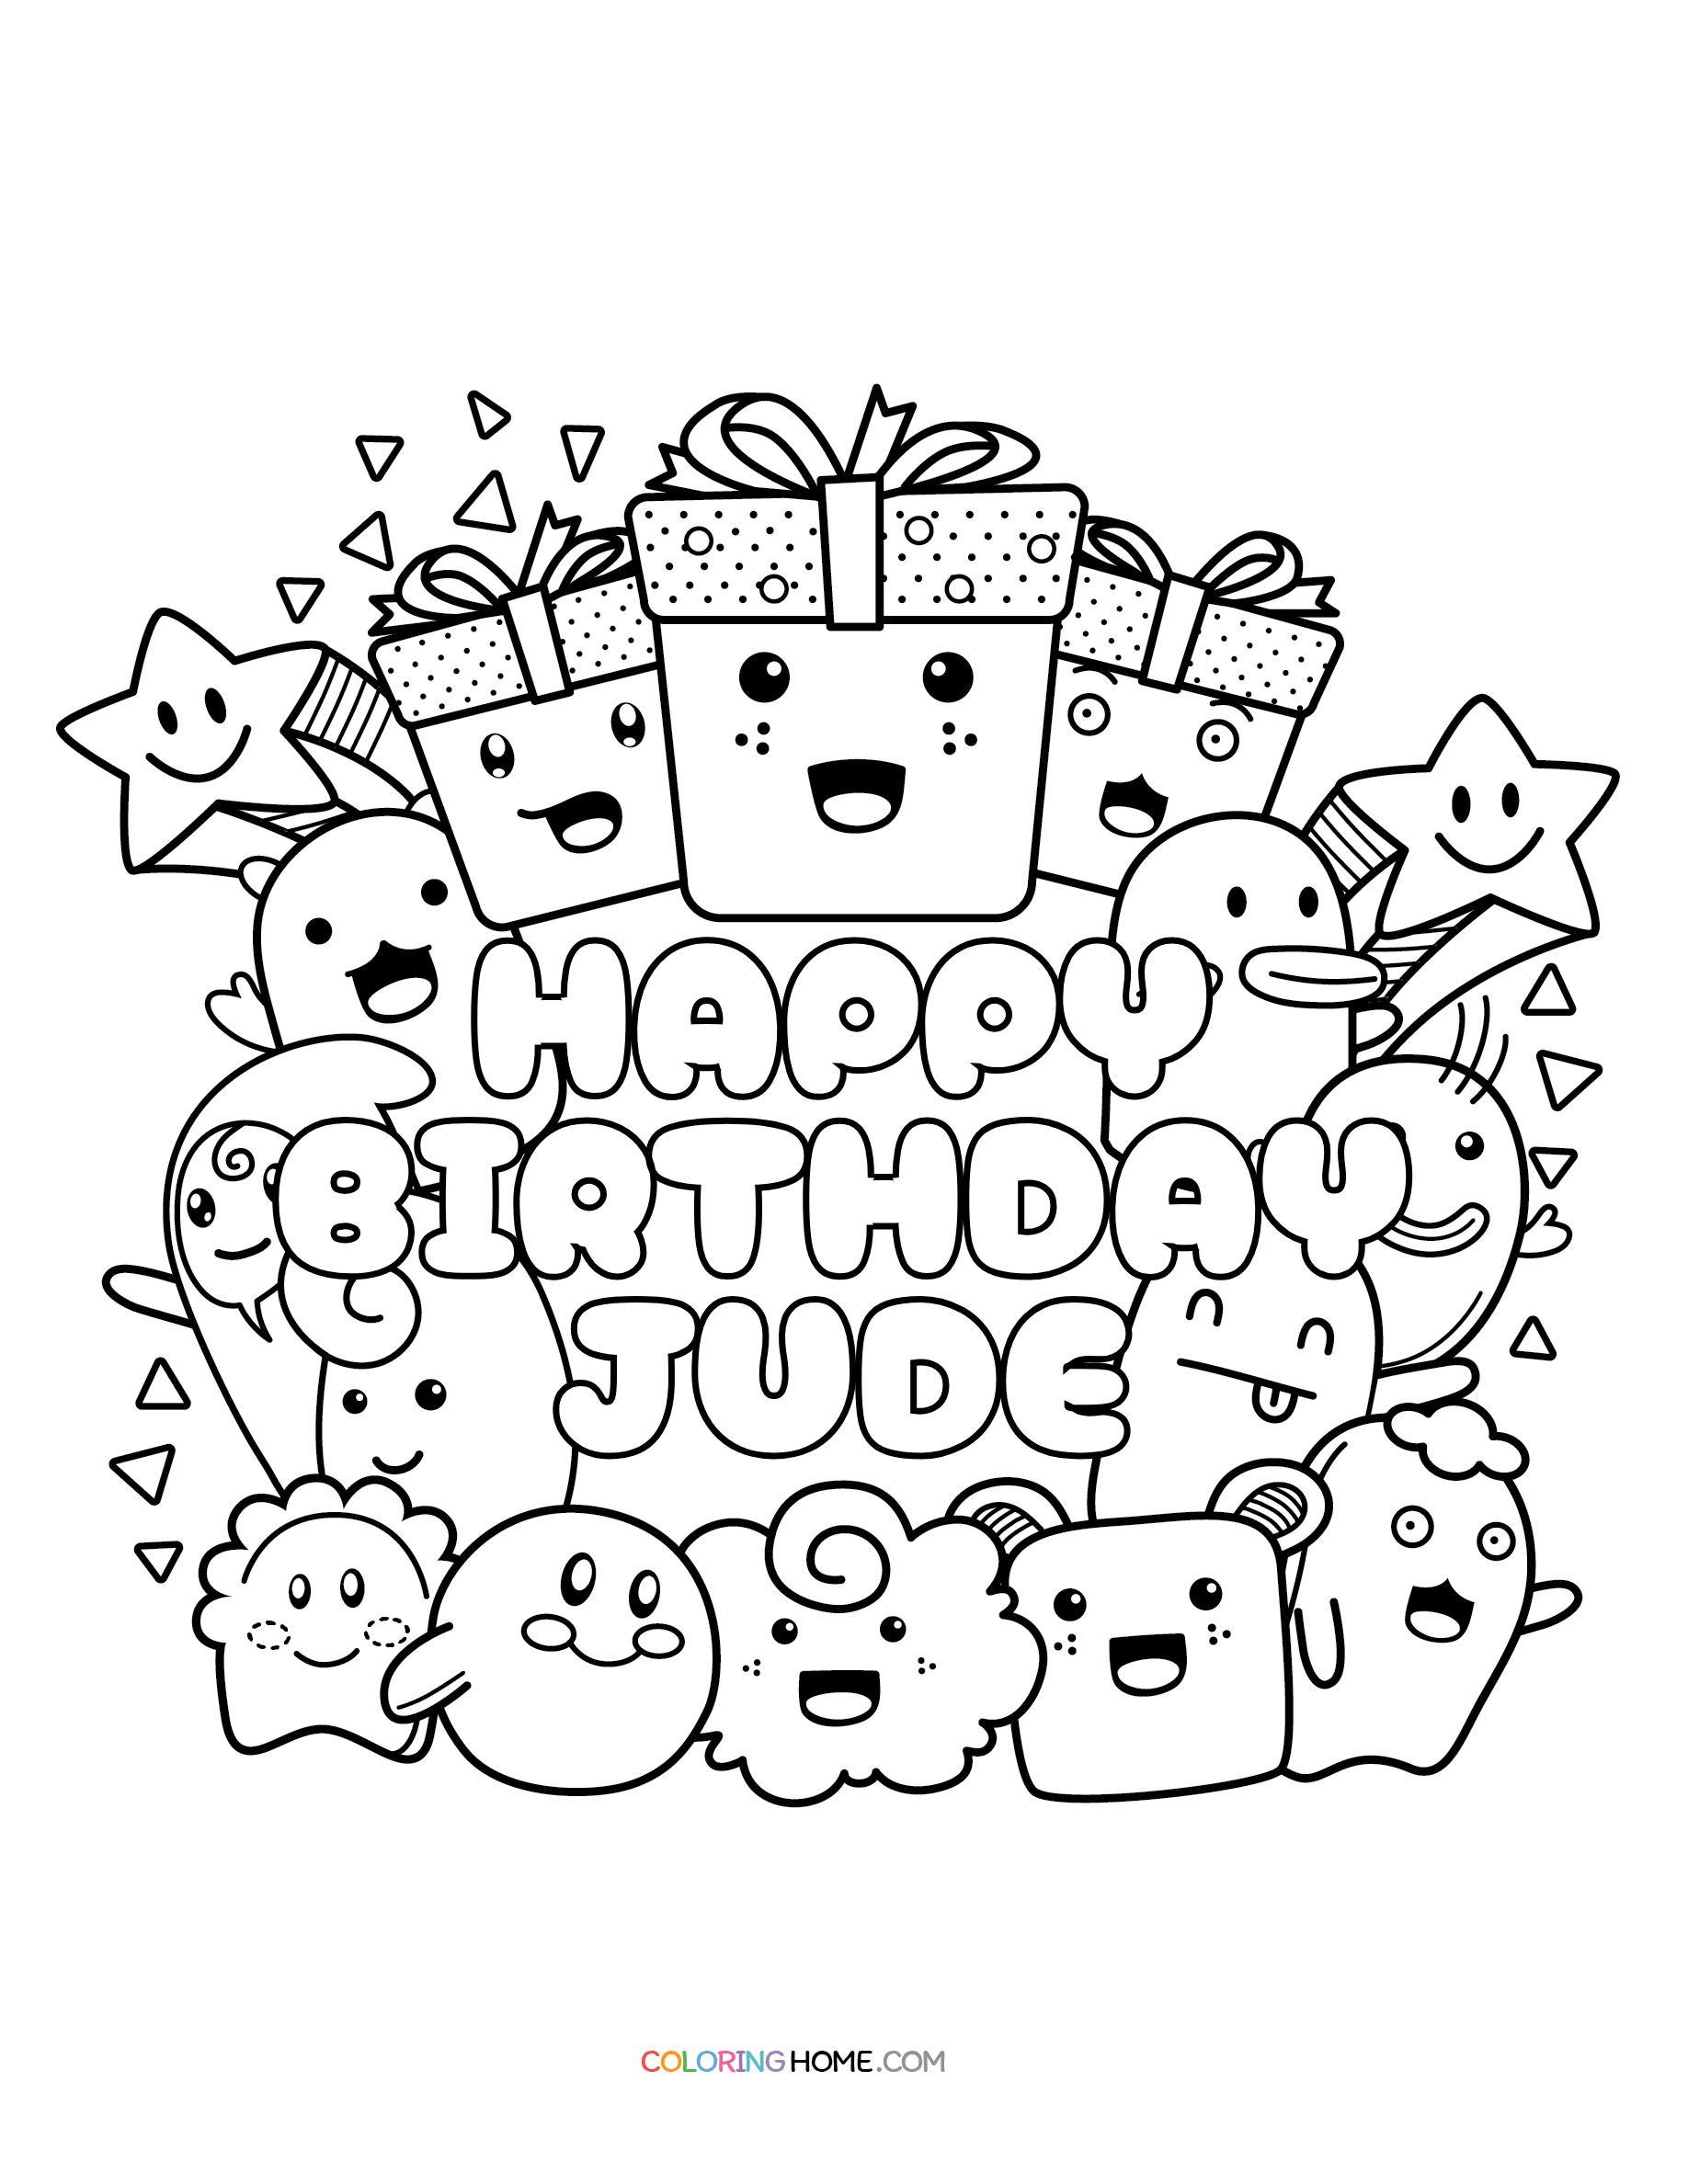 Happy Birthday Jude coloring page